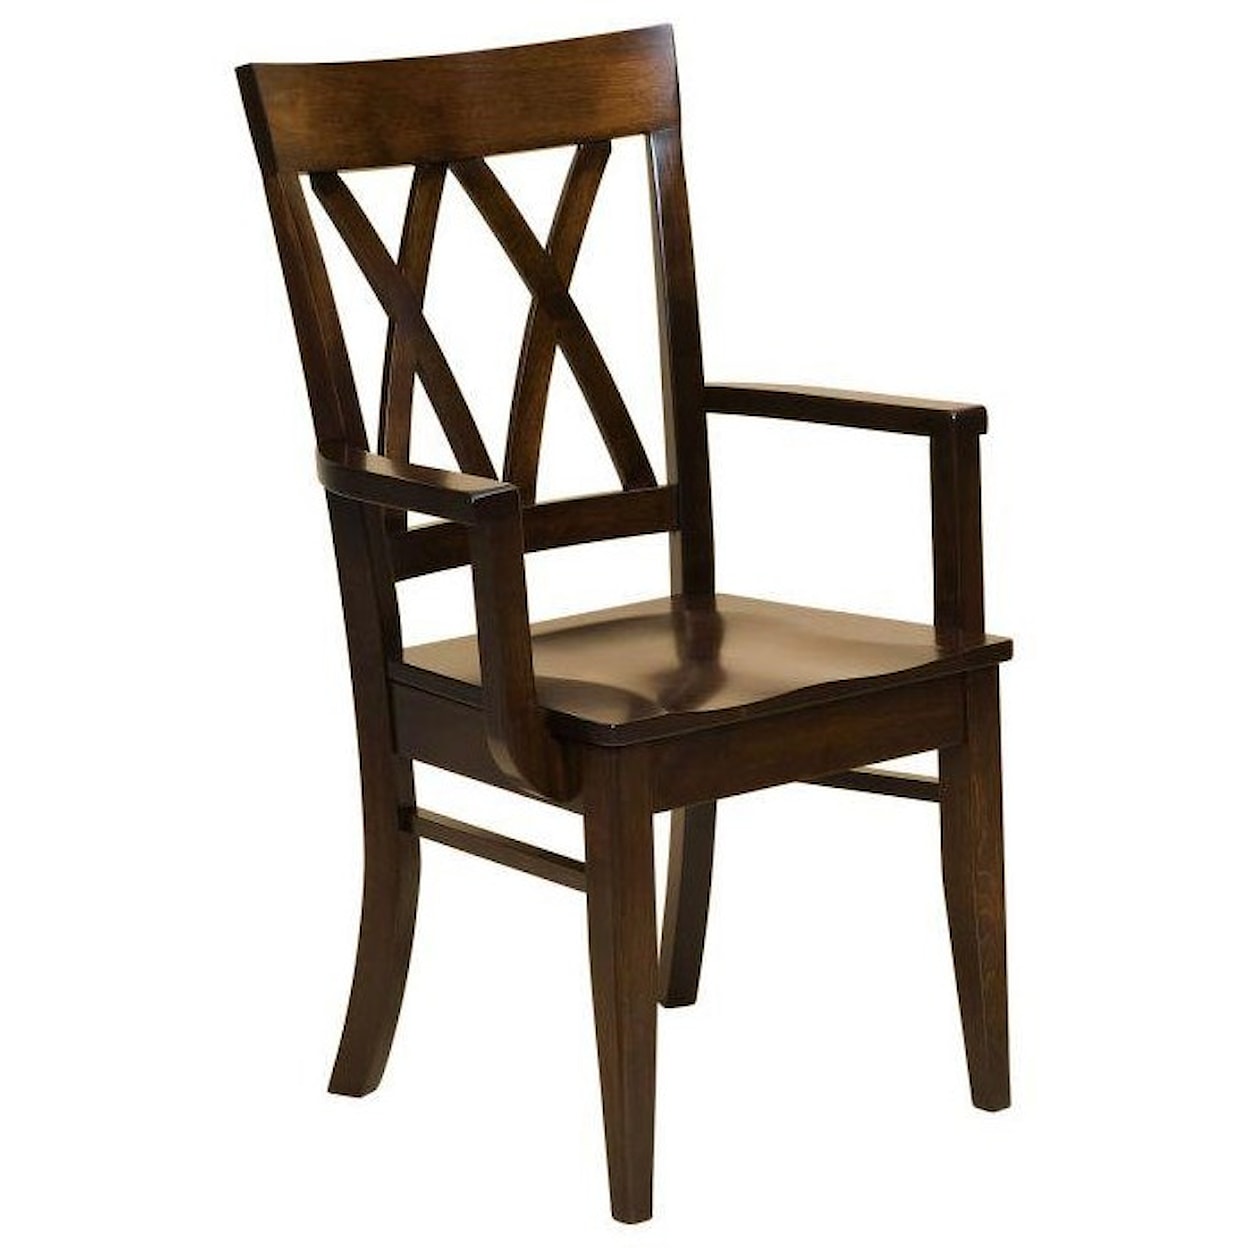 F&N Woodworking Herrington Arm Chair